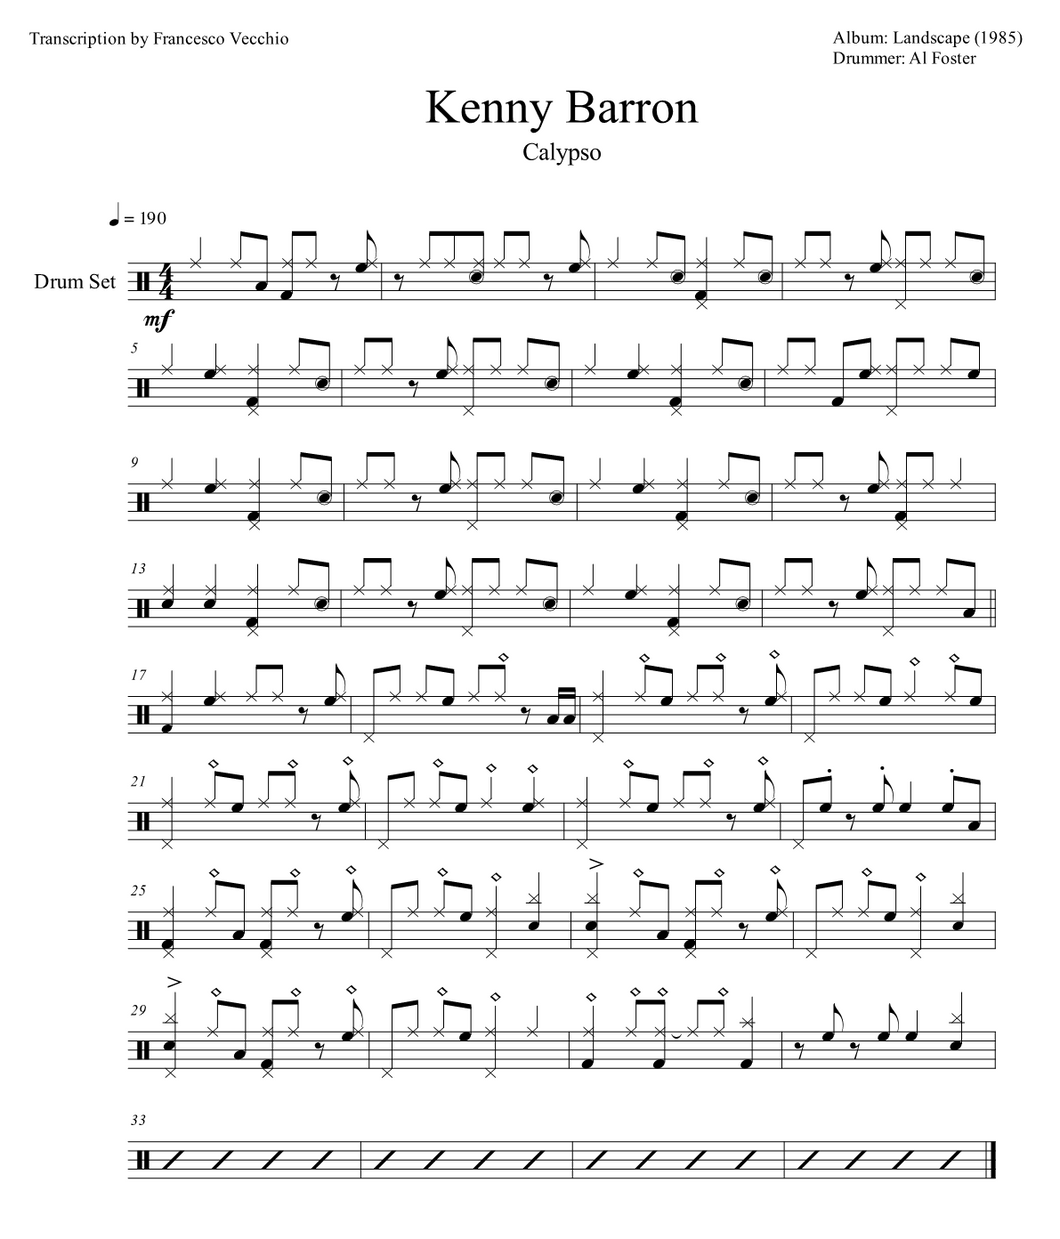 Calypso - Kenny Barron - Selection Drum Transcription / Drum Sheet Music - FrancisDrummingBlog.com